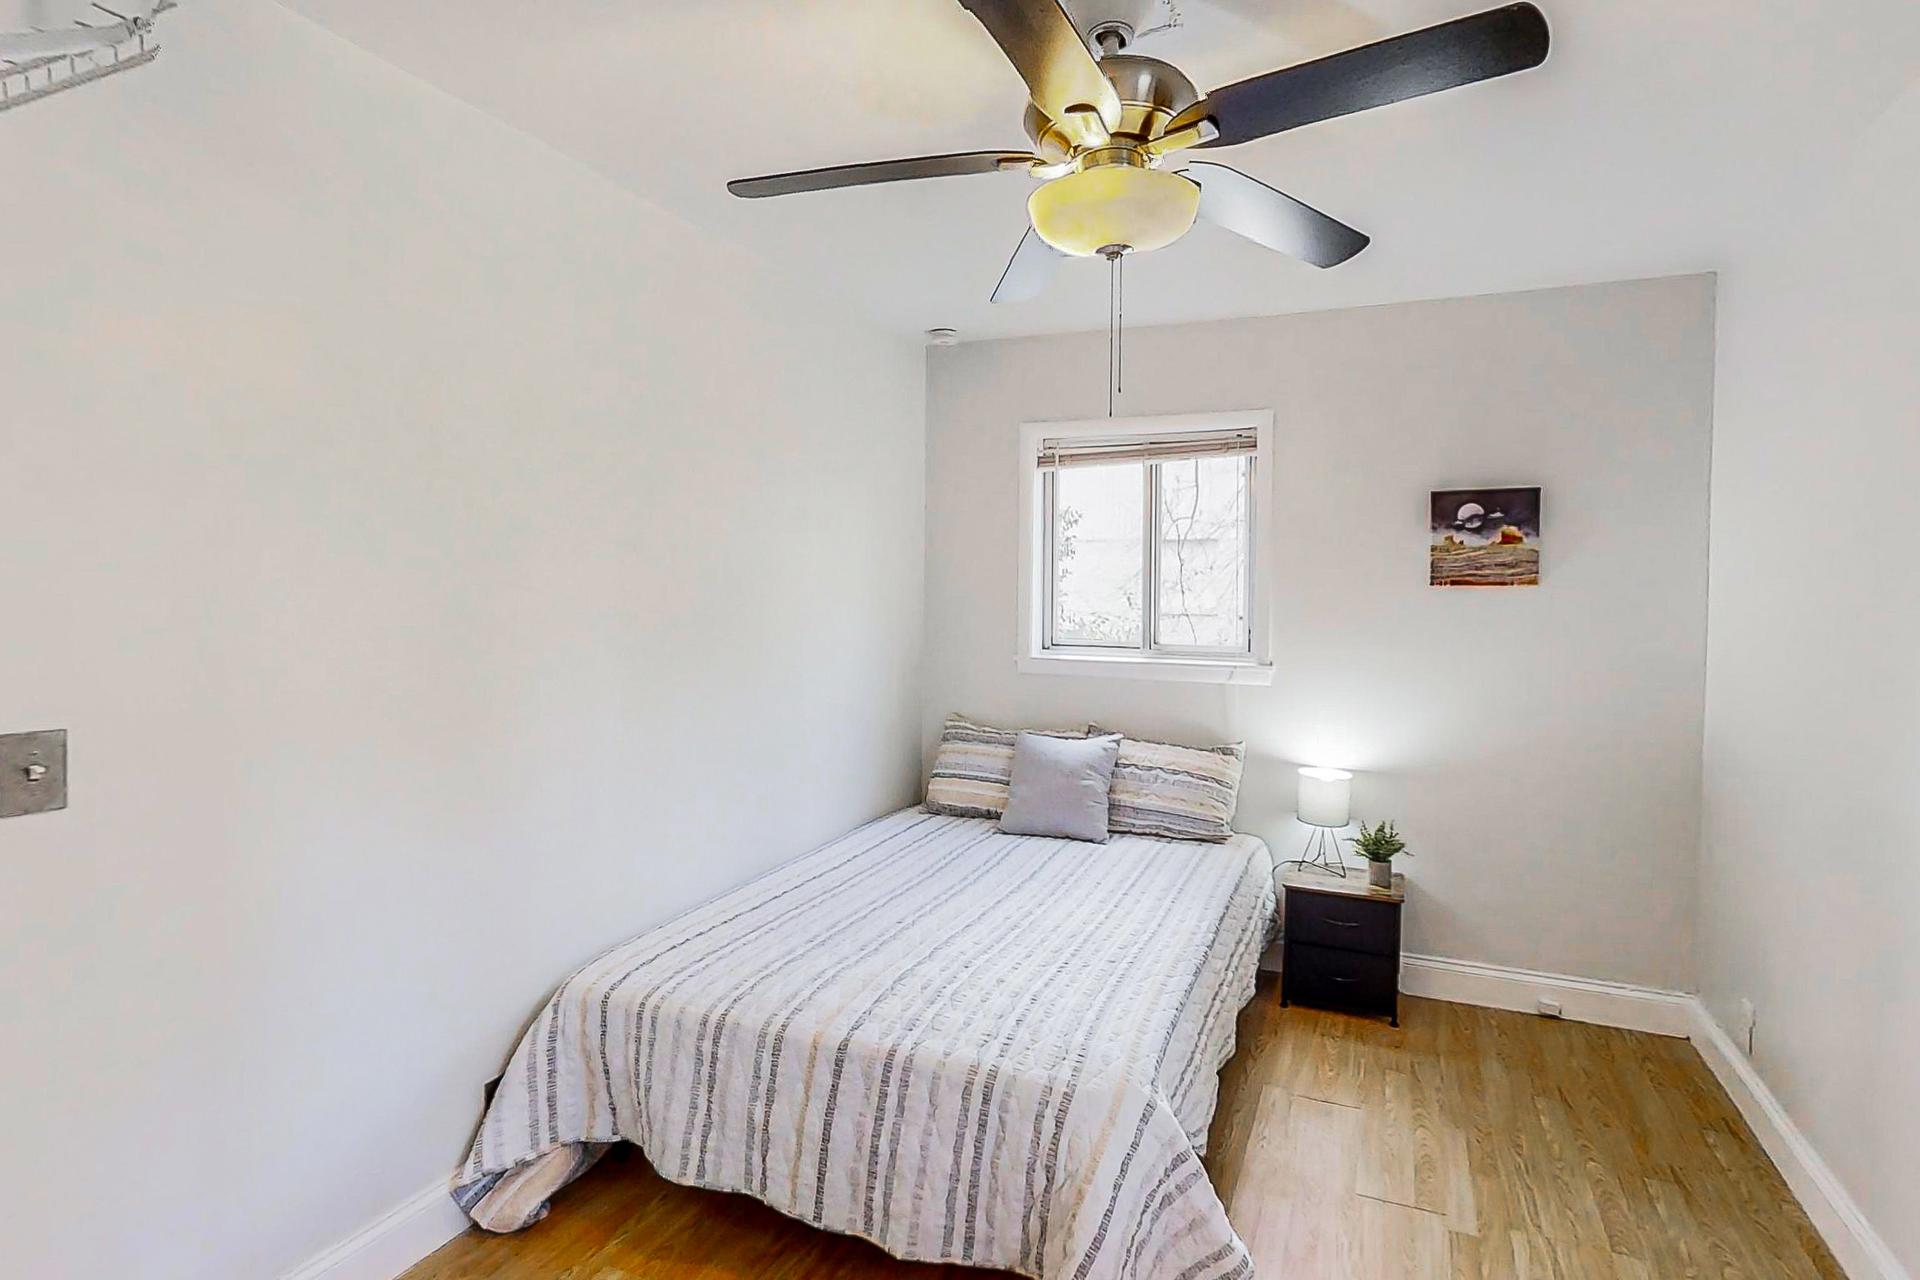 bedroom, detected: ceiling fan, window blind, bed